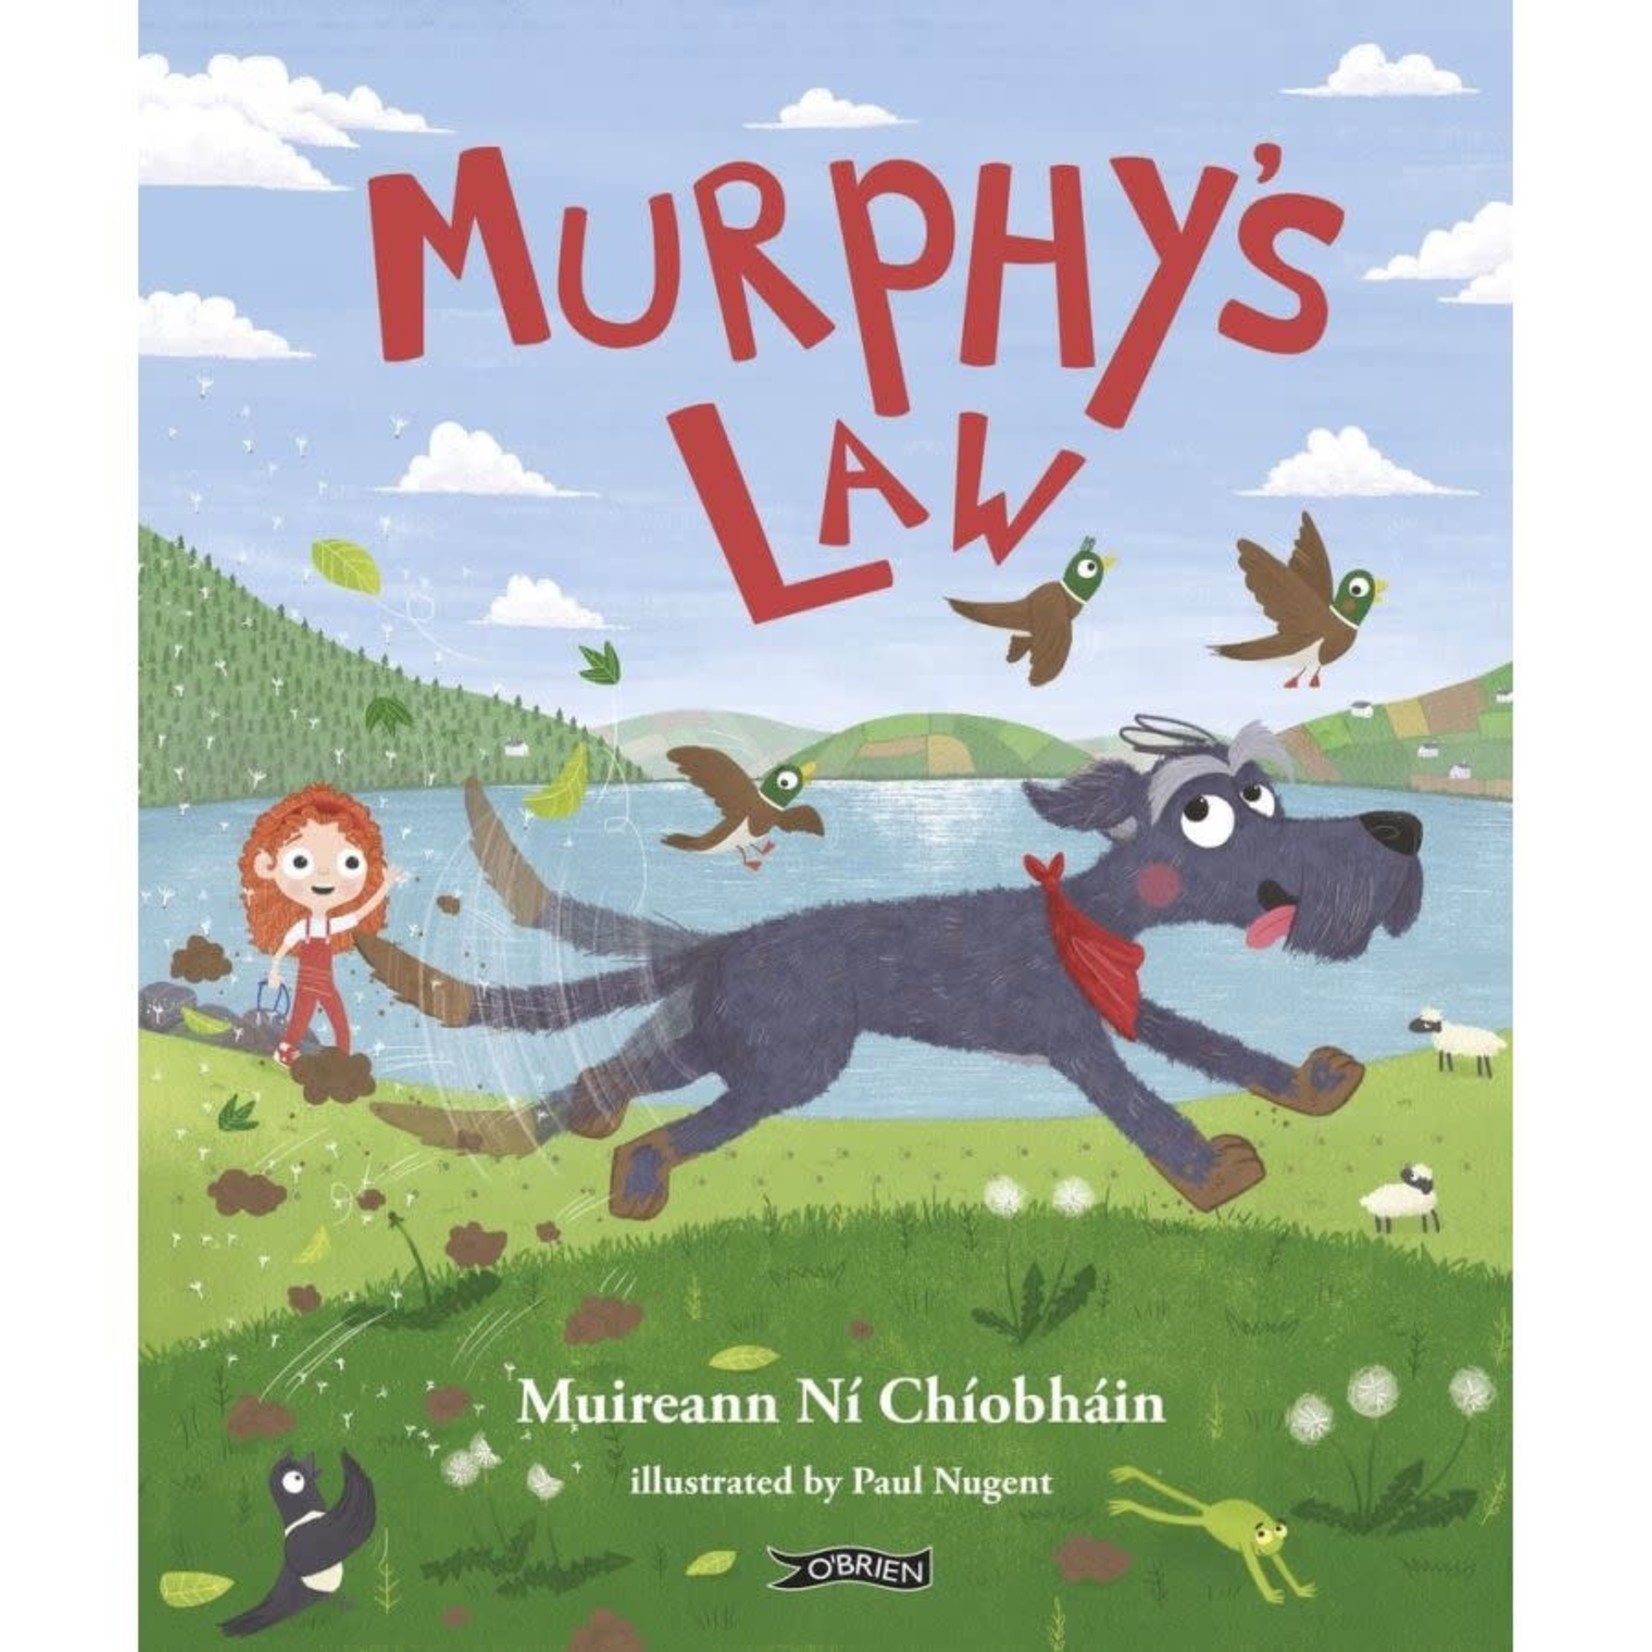 Celtic Books "Murphy's Law" by: Muireann Ni Chiobhain